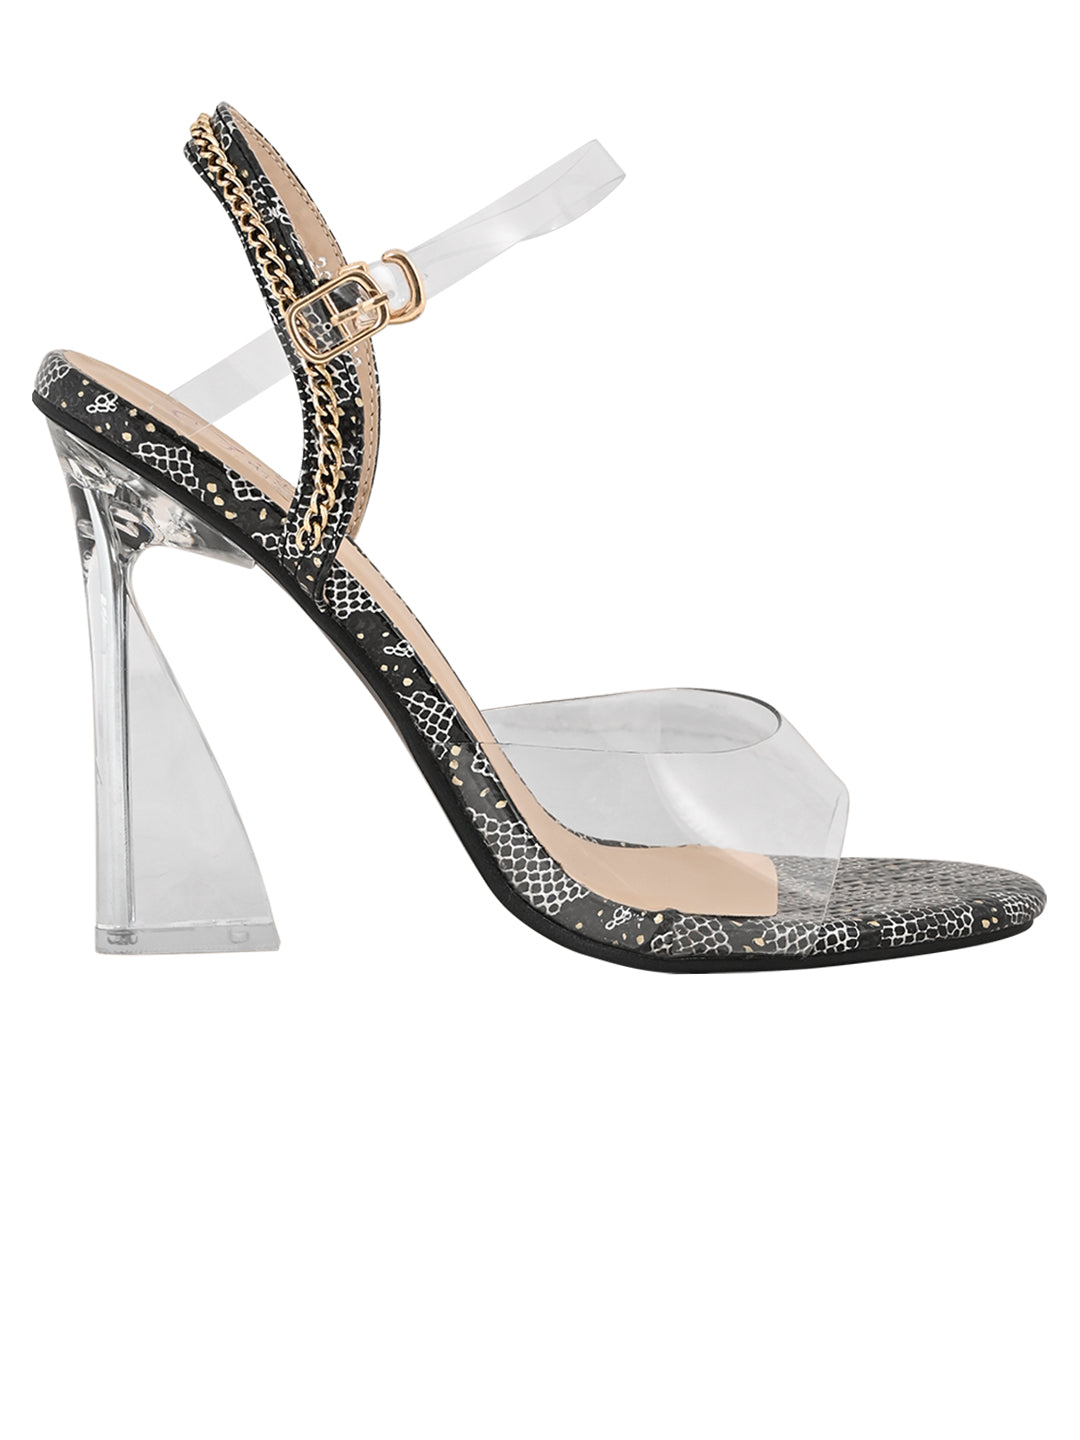 Fashion Nova Glass Slipper Maria2 clear women's size 7 high heels | eBay